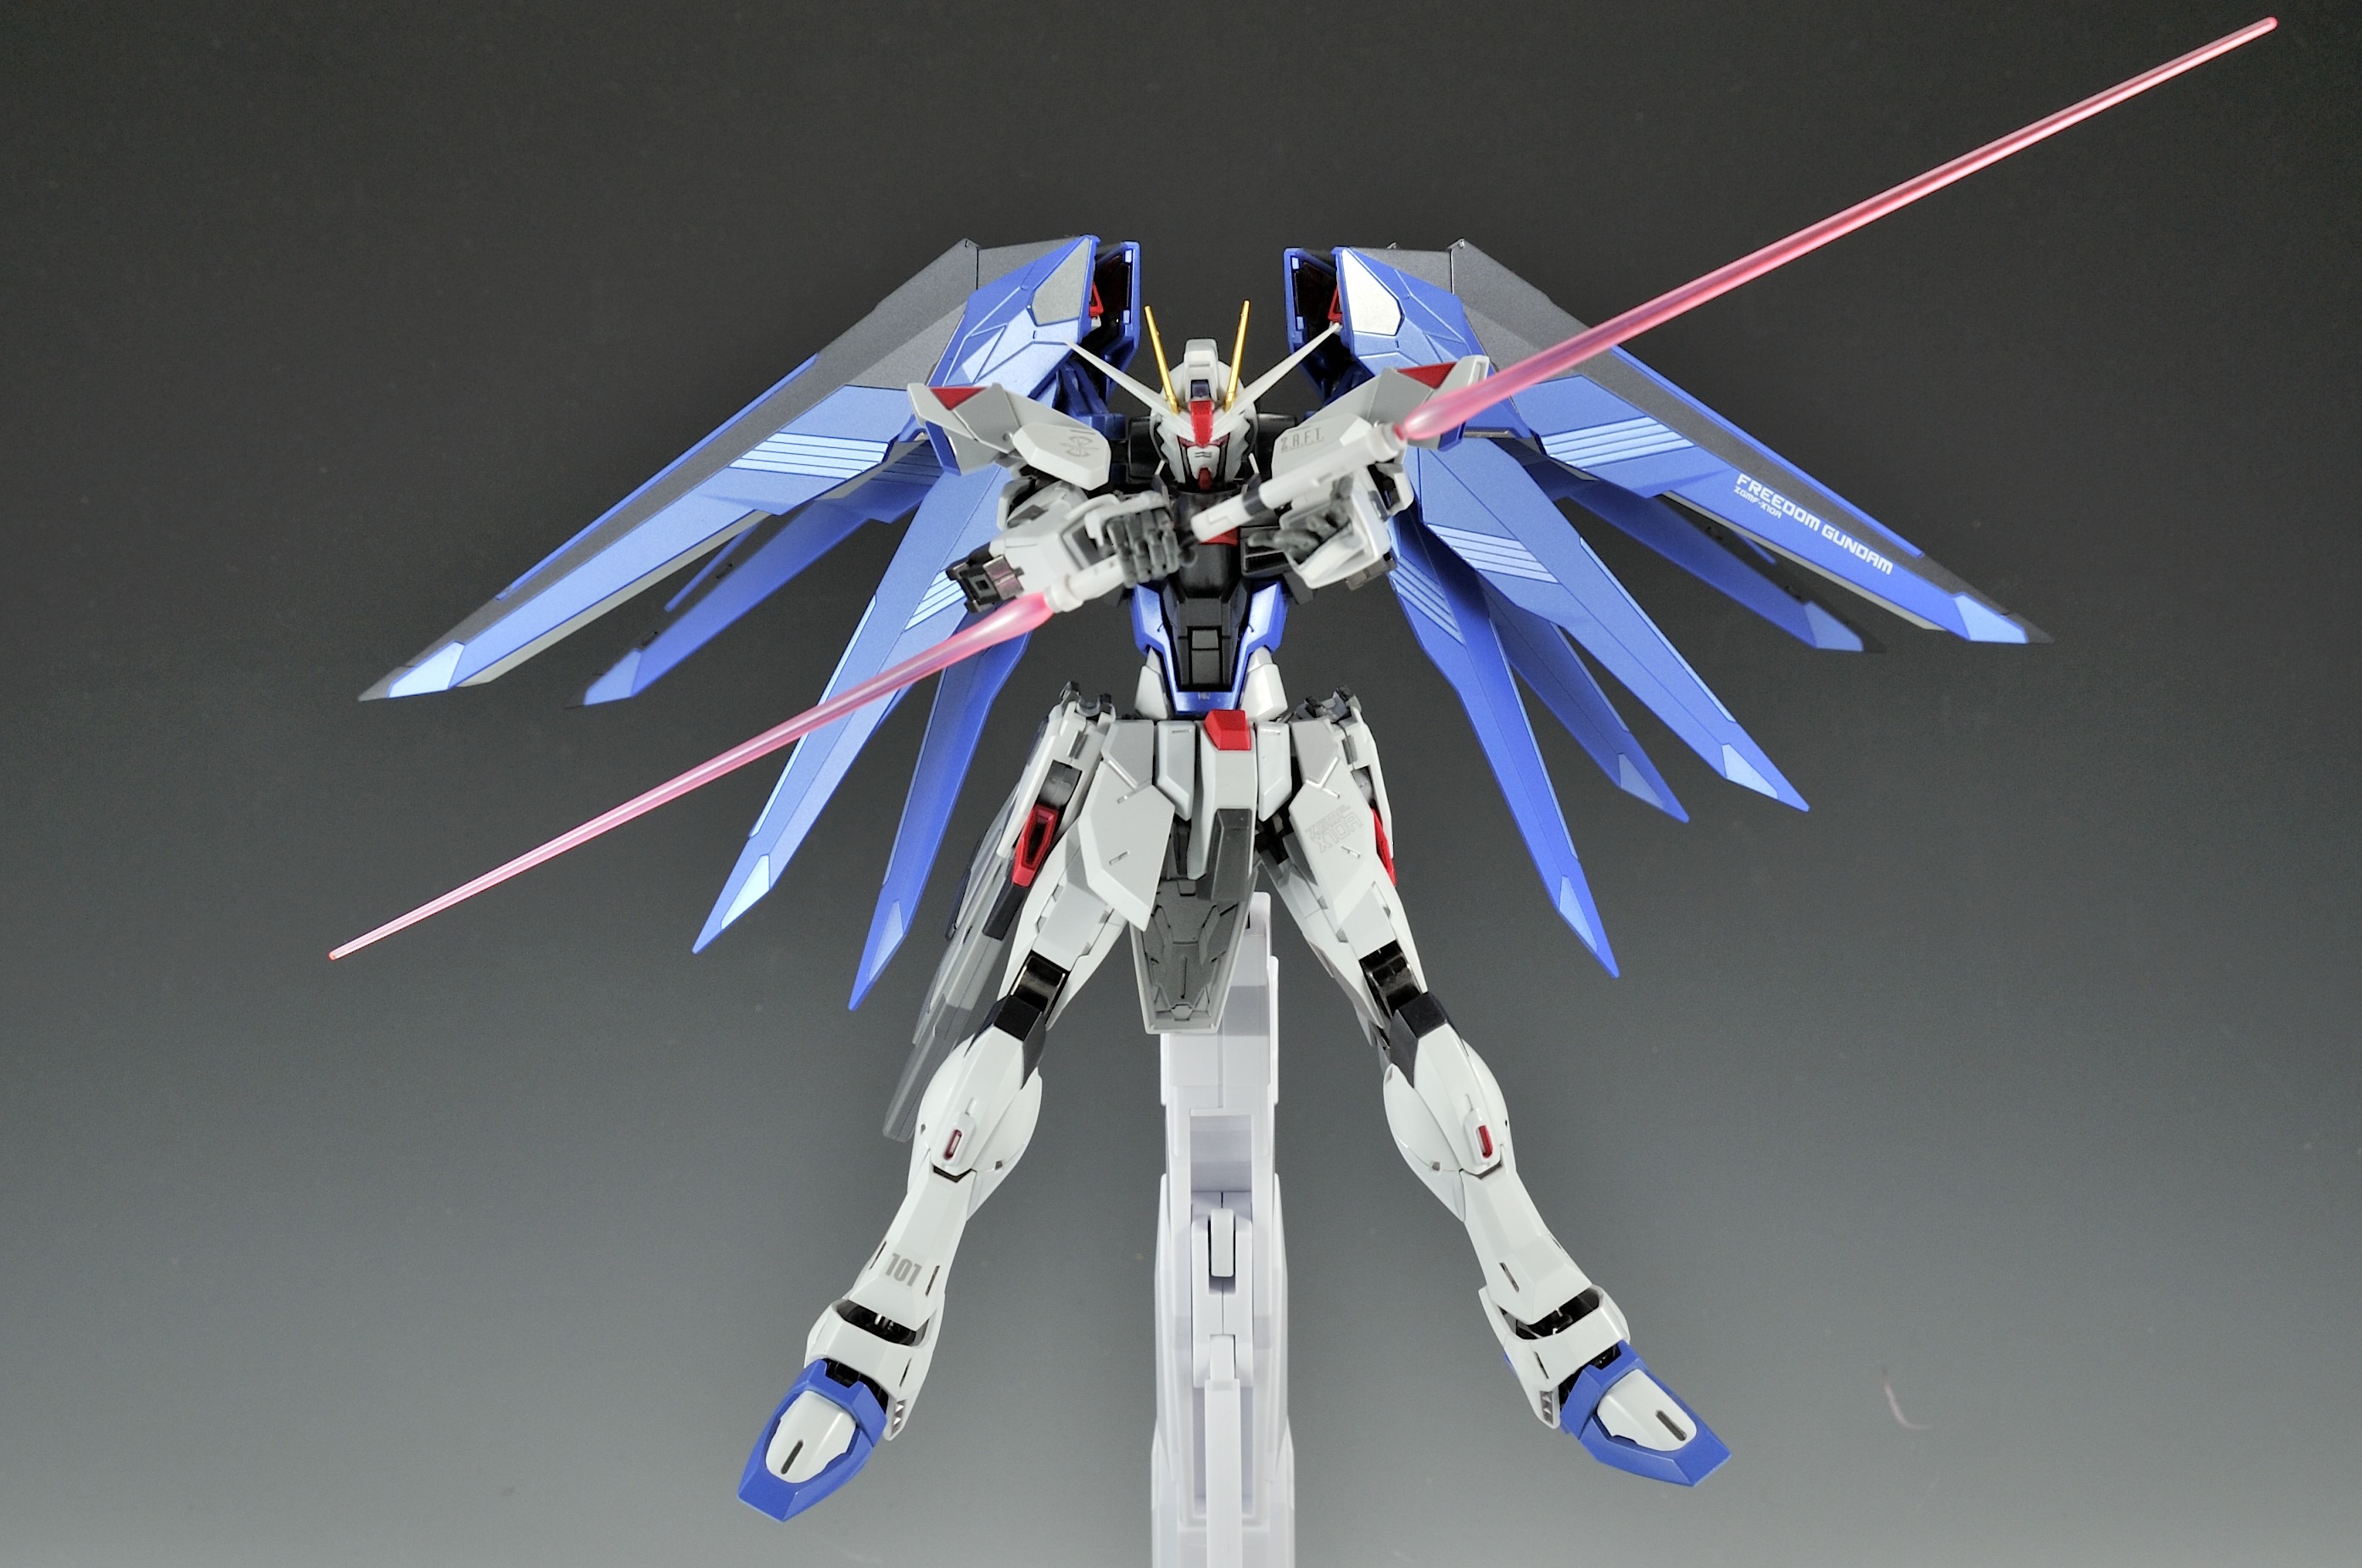 Review Metal Build Freedom Gundam: Big Wallpaper Size Images.